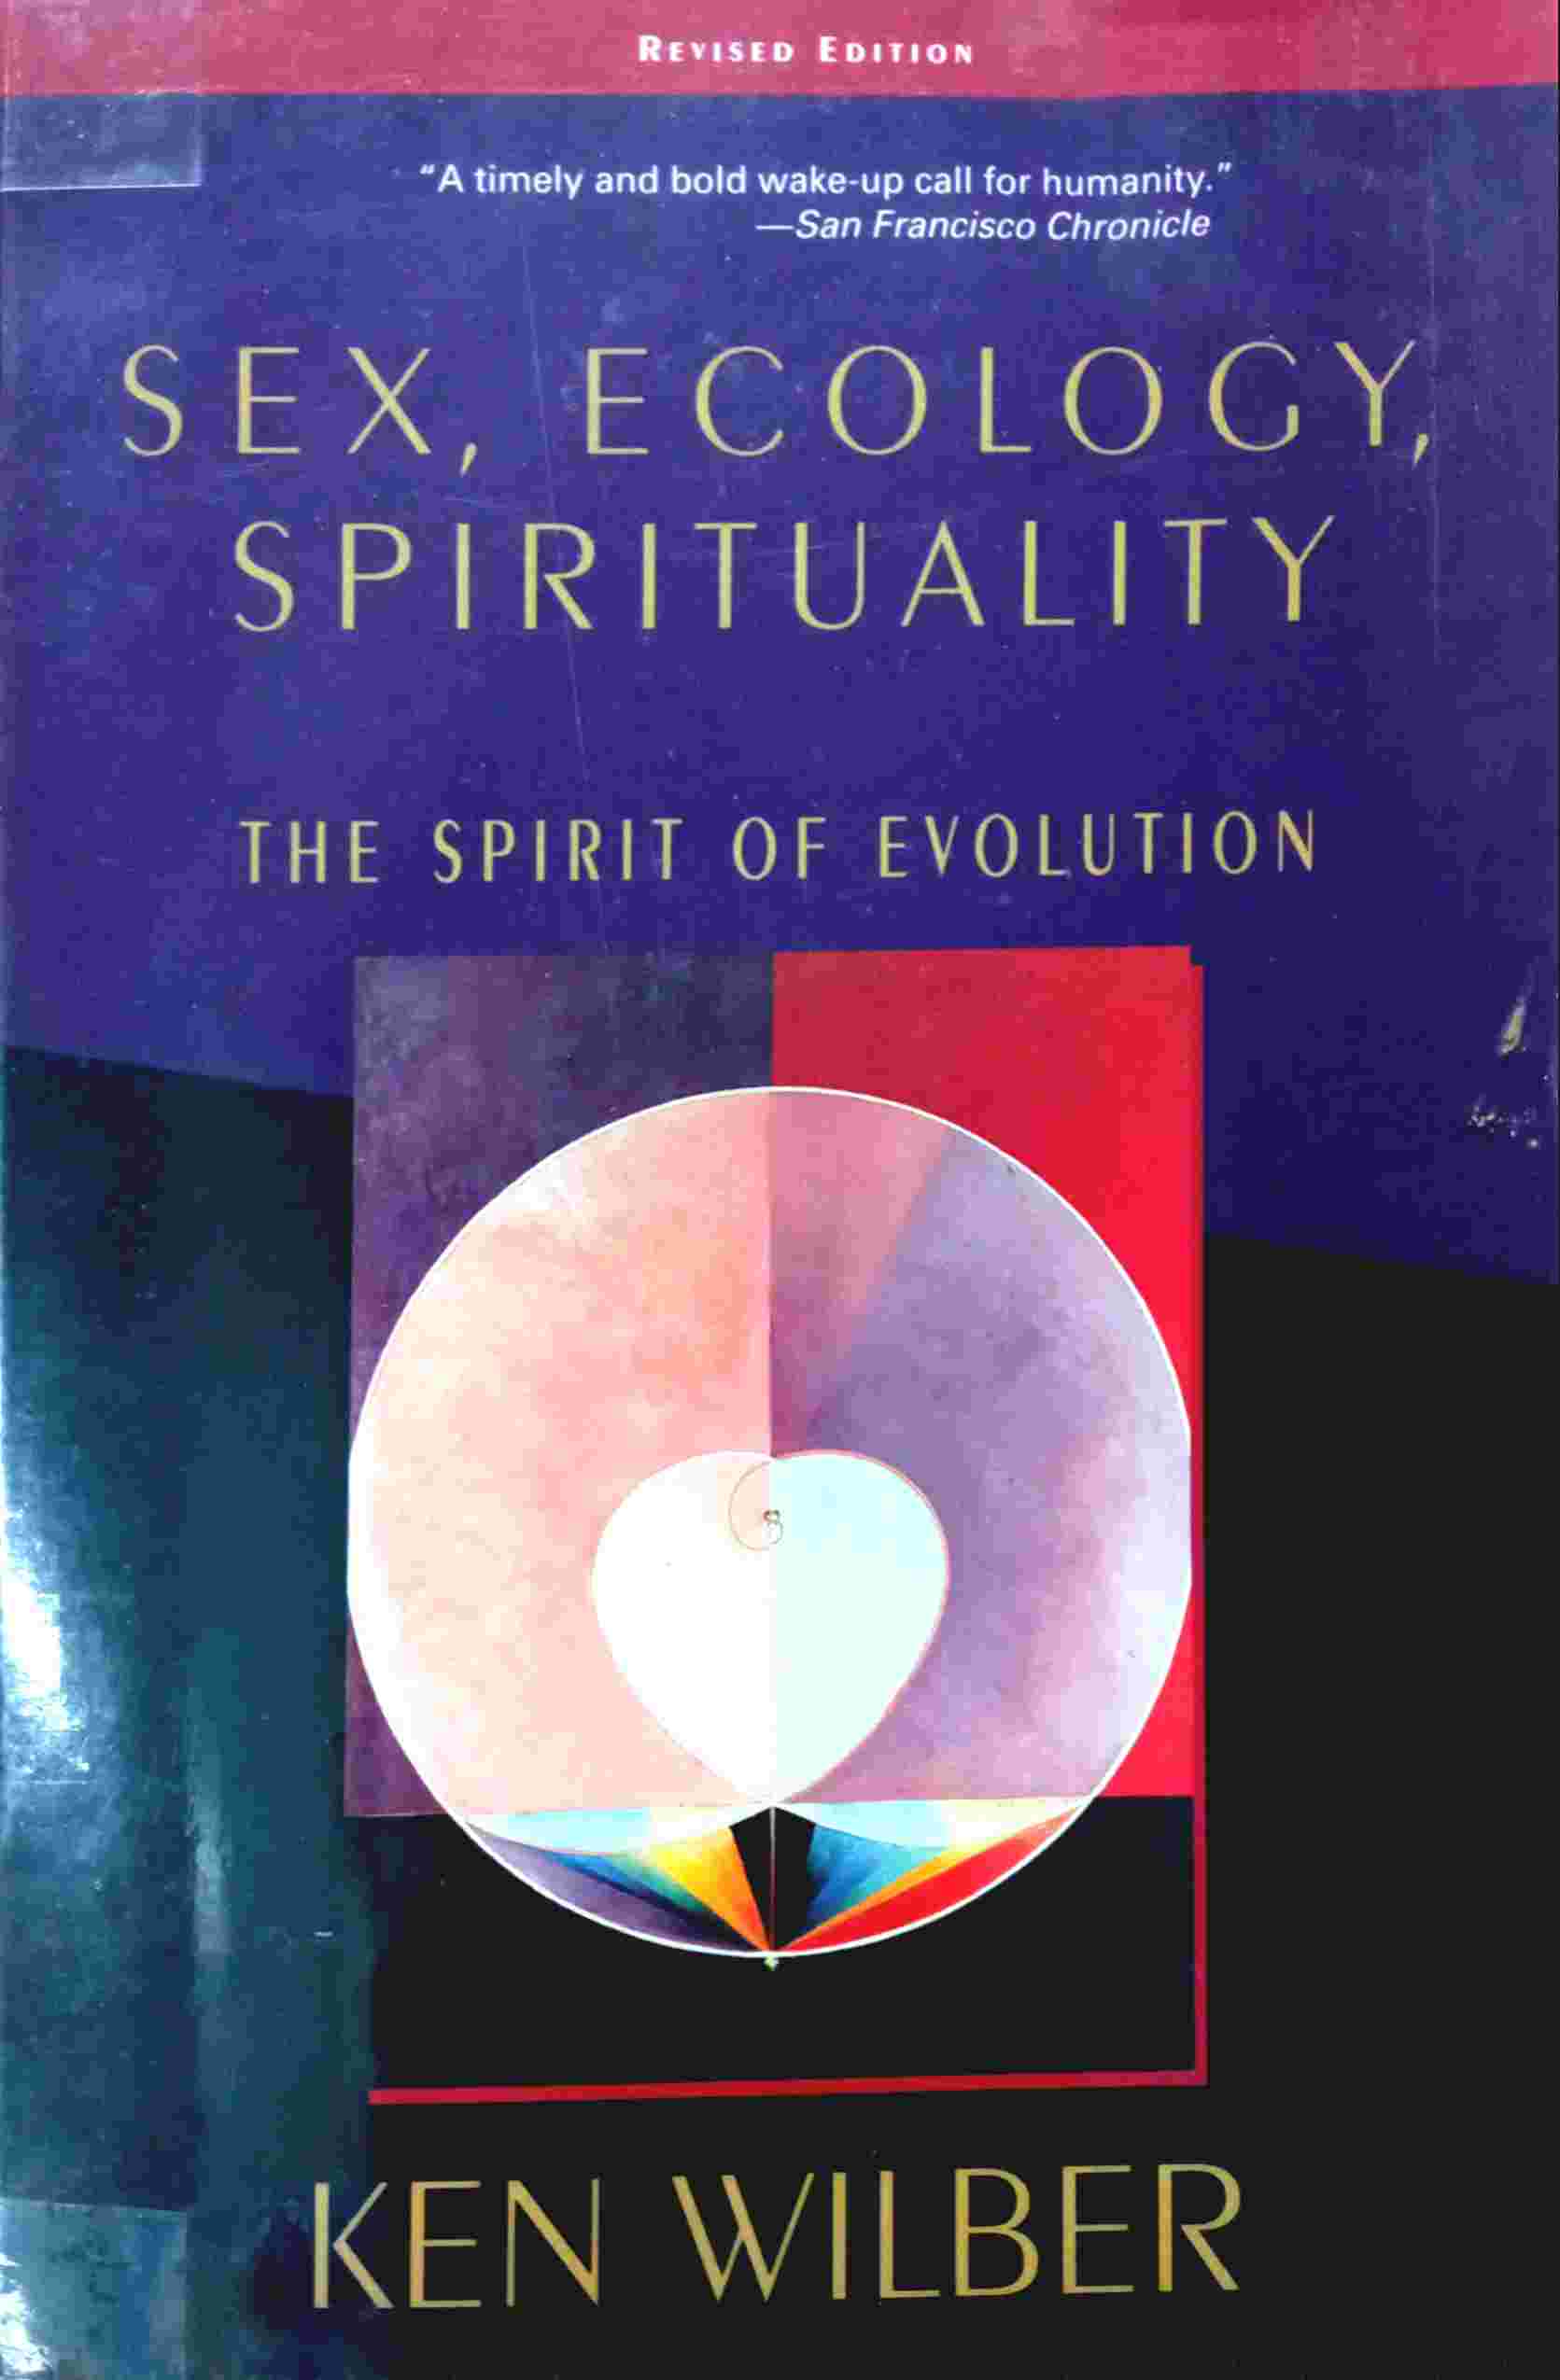 SEX, ECOLOGY, SPIRITUALITY